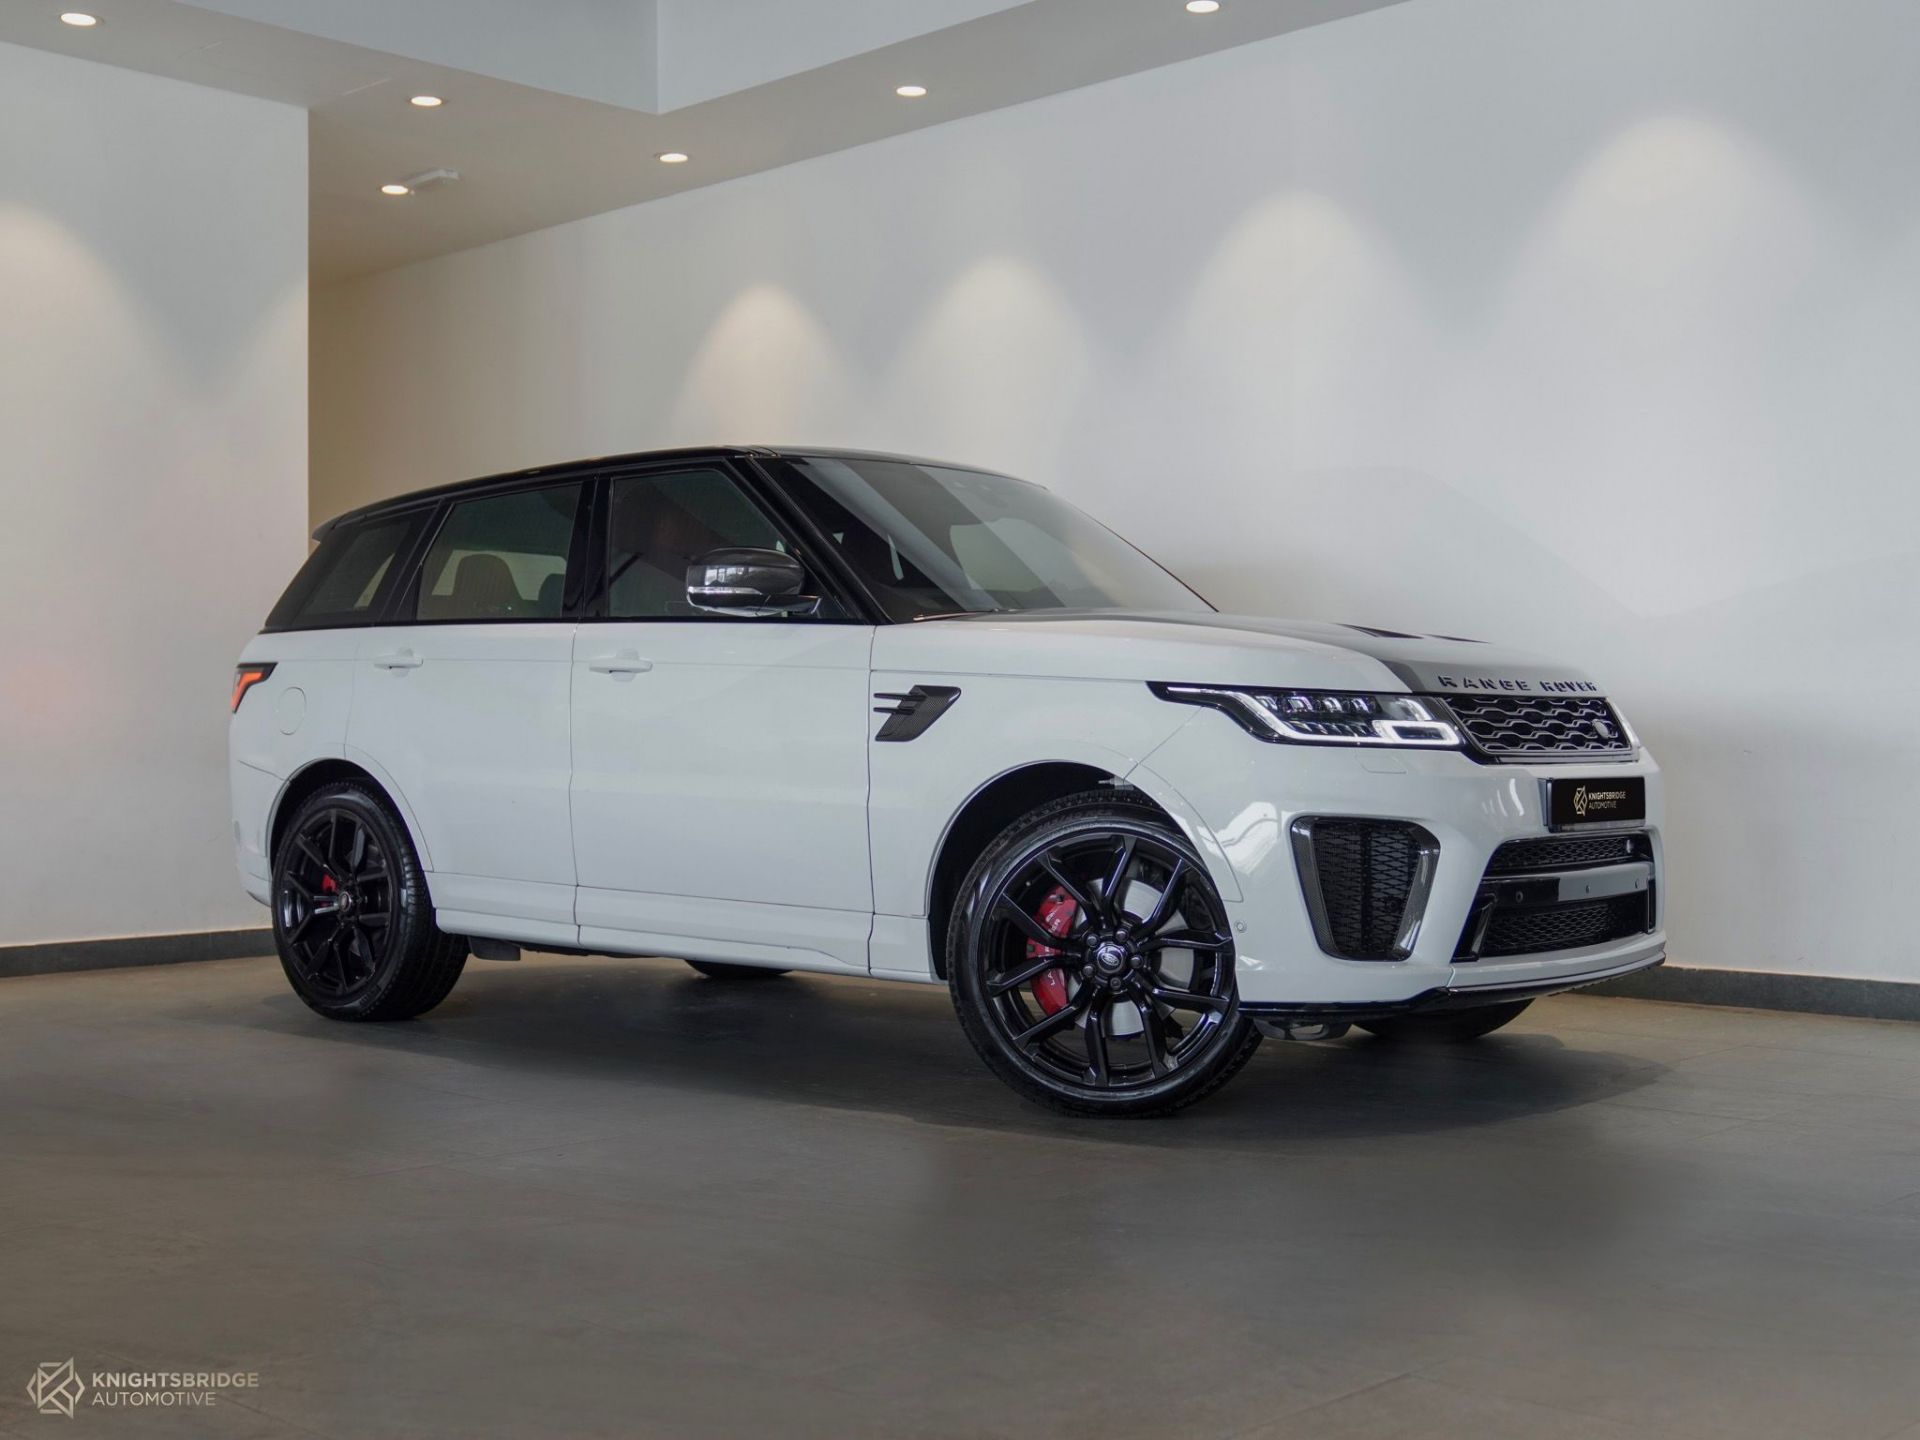 2019 Range Rover Sport SVR at Knightsbridge Automotive - (10349 - 1)